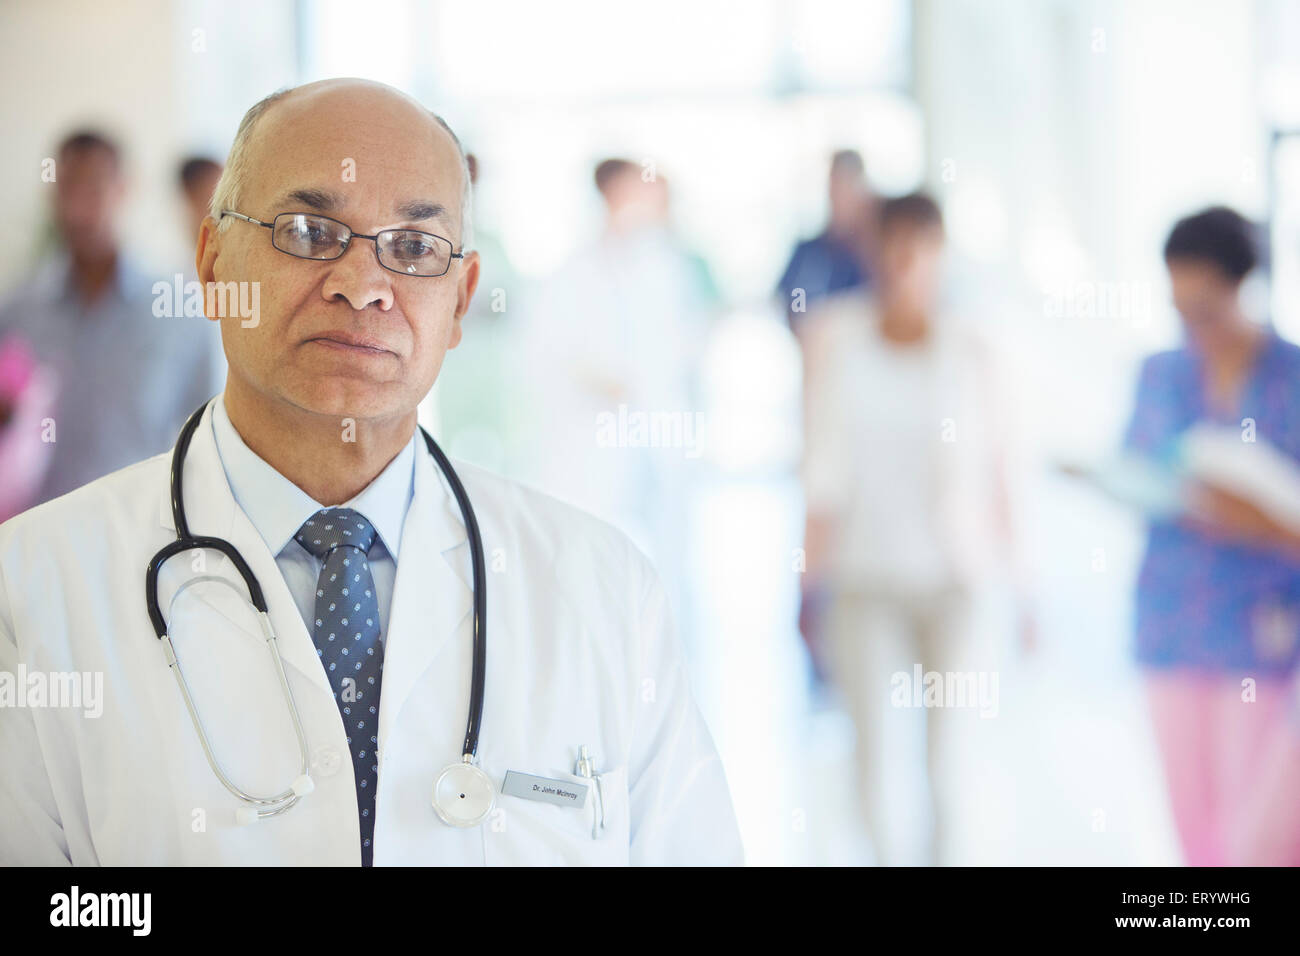 Portrait of confident doctor in hospital corridor Stock Photo